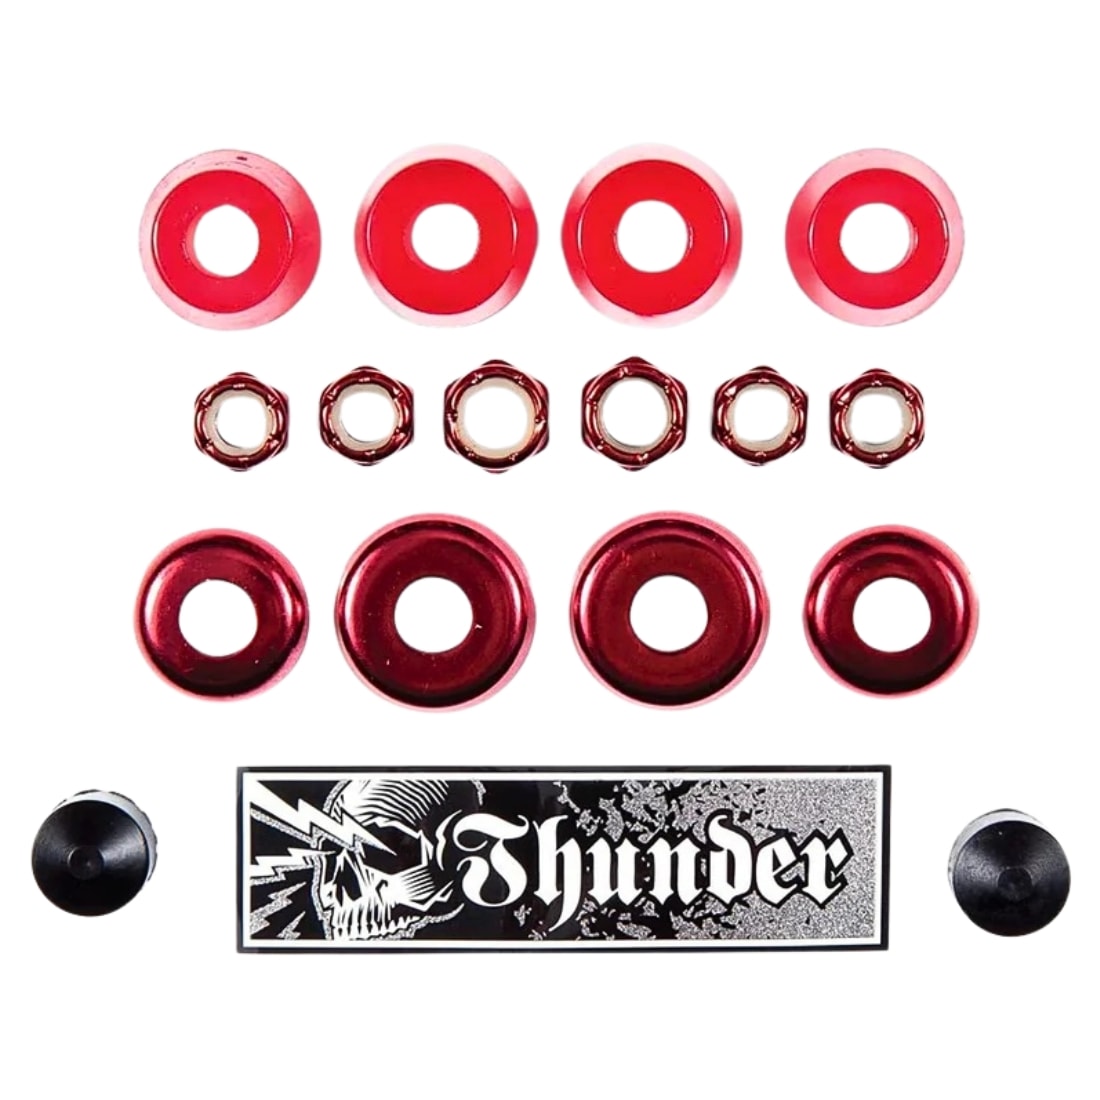 Thunder 90 Duro Rebuild Kit (Bushings/Nuts/Pivot Cup/Washers) - Red - Skateboard Bushings by Thunder